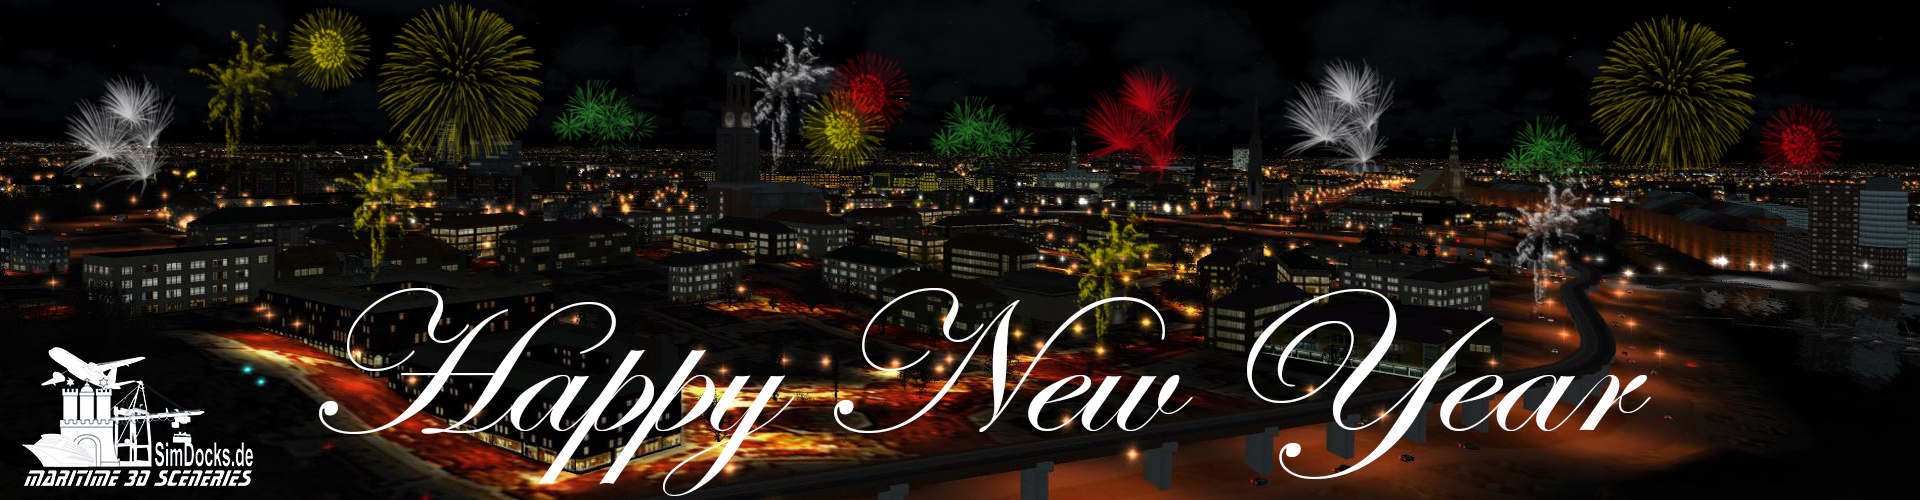 Happy_New_Year_Foren.jpg